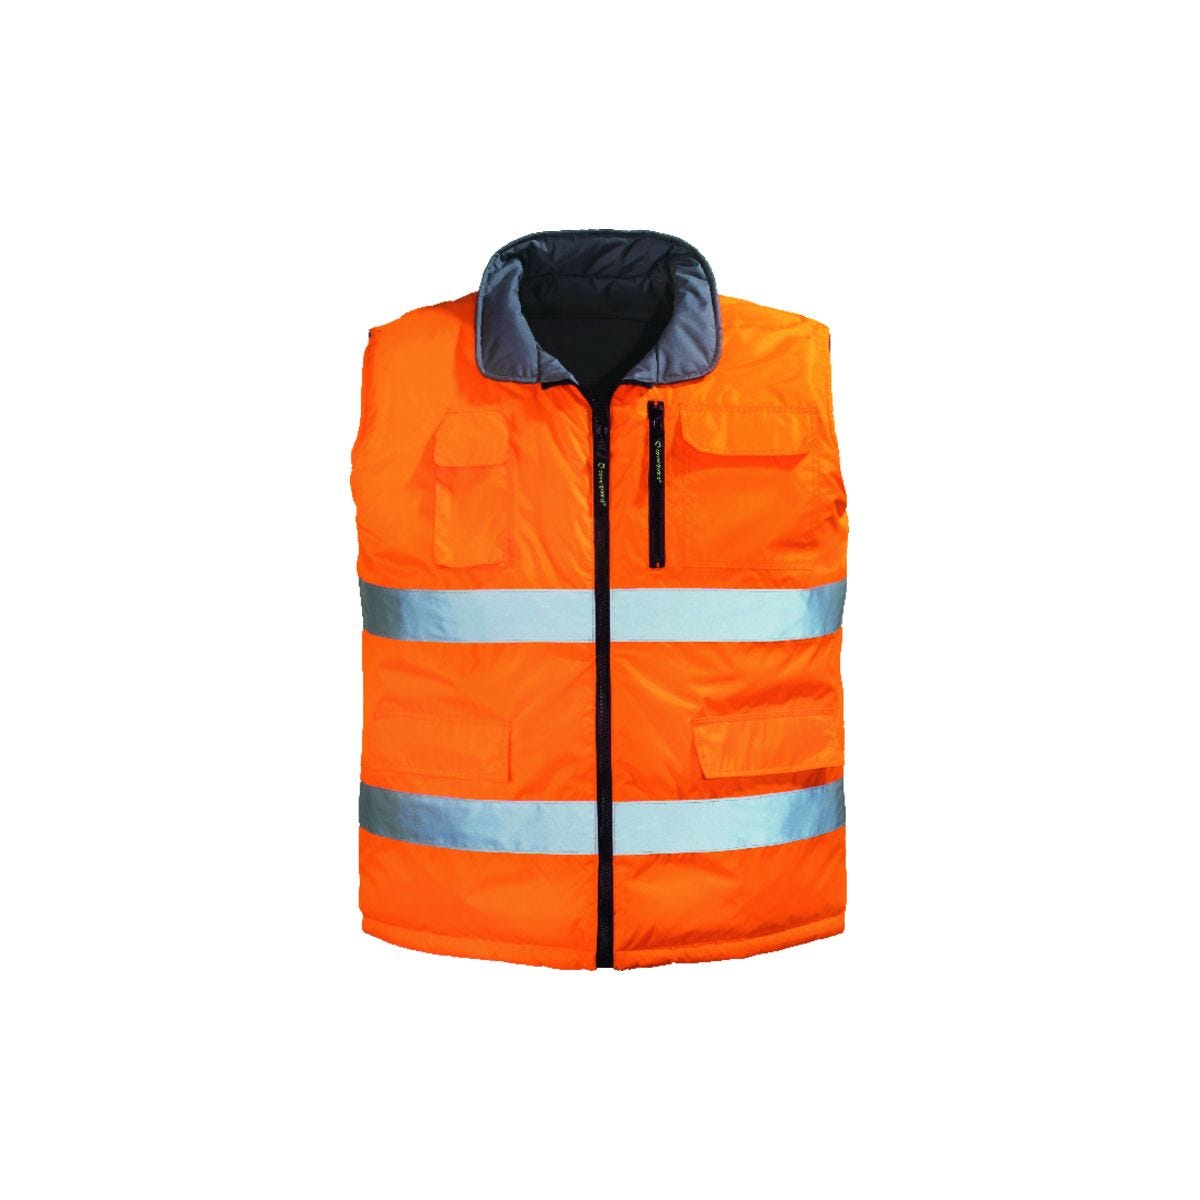 HI-WAY gilet réversible orange HV/gris, Polyester Oxford 150D - COVERGUARD - Taille M 0